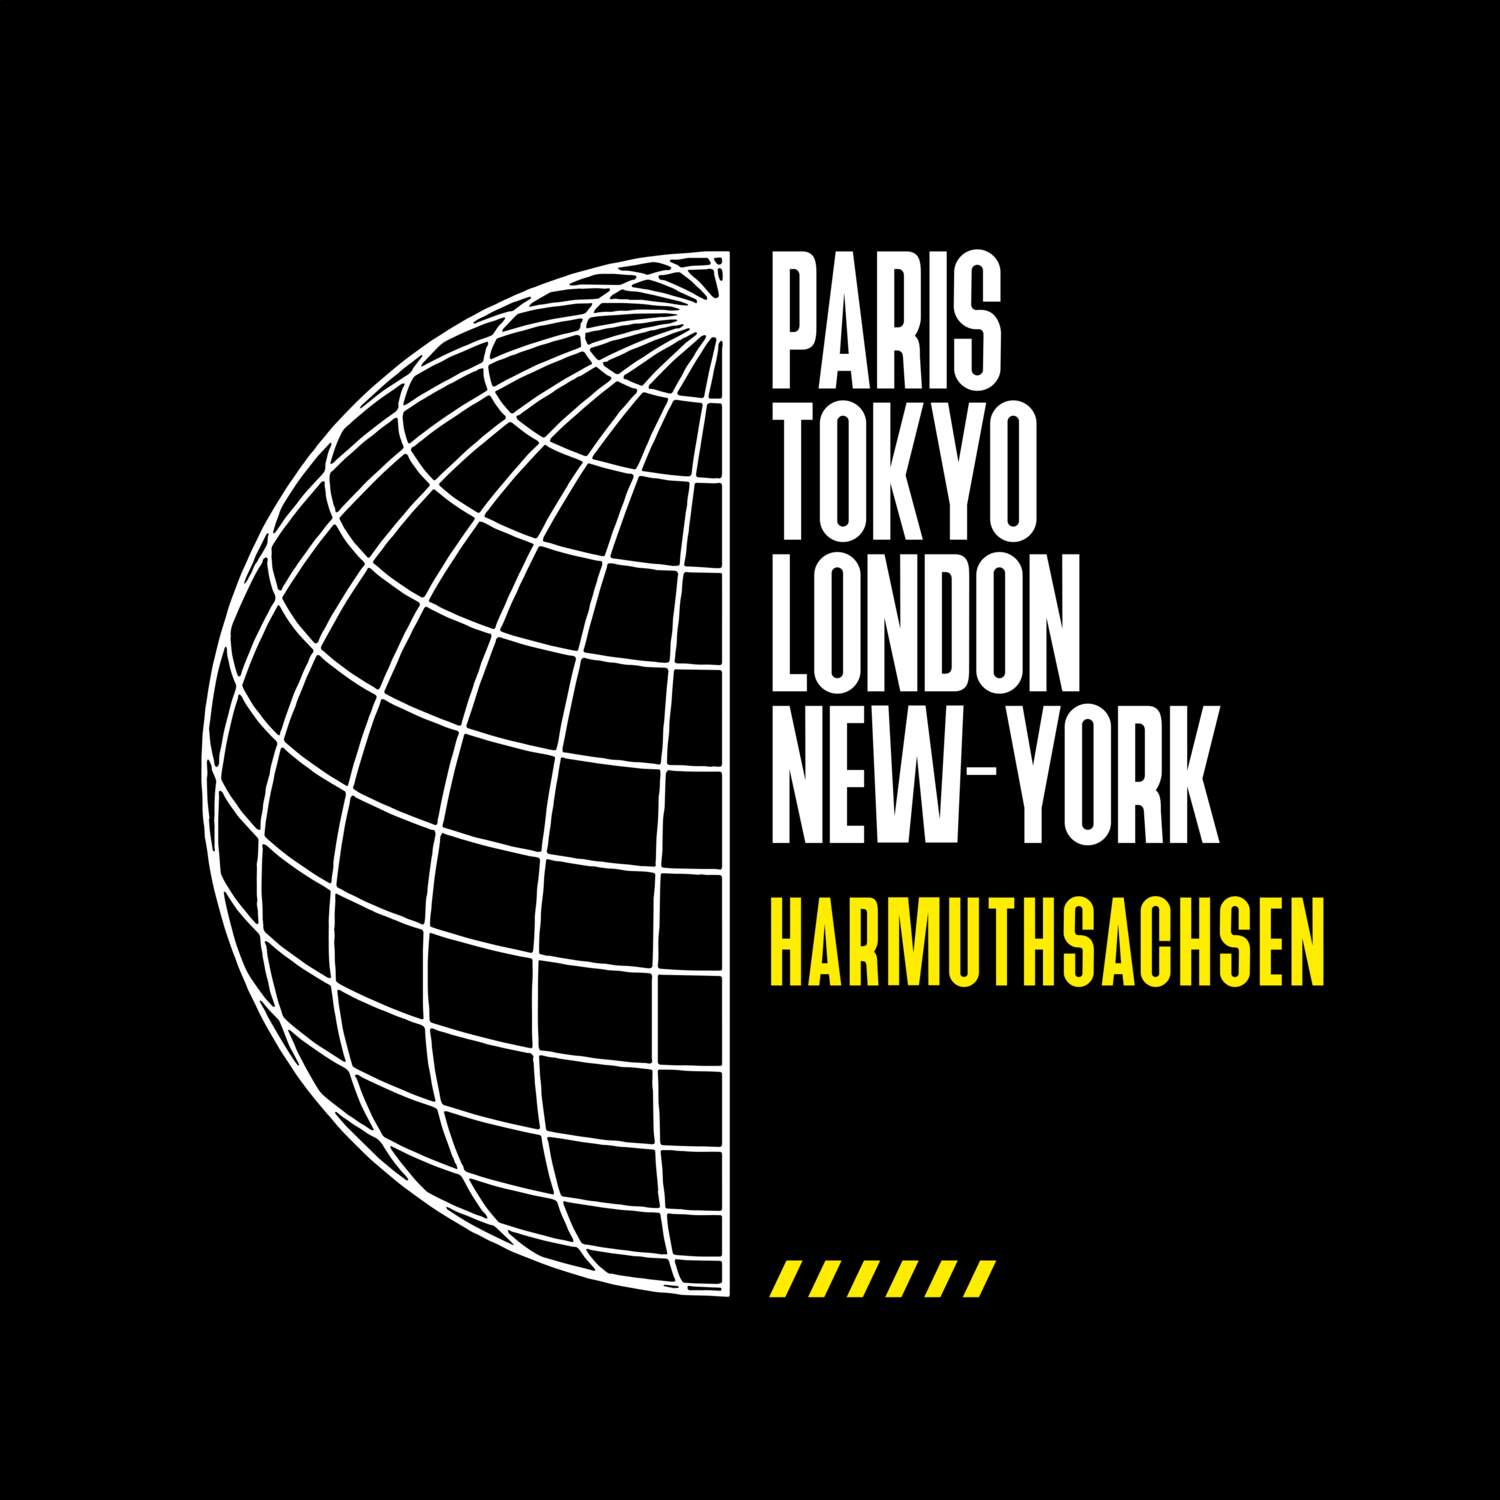 Harmuthsachsen T-Shirt »Paris Tokyo London«